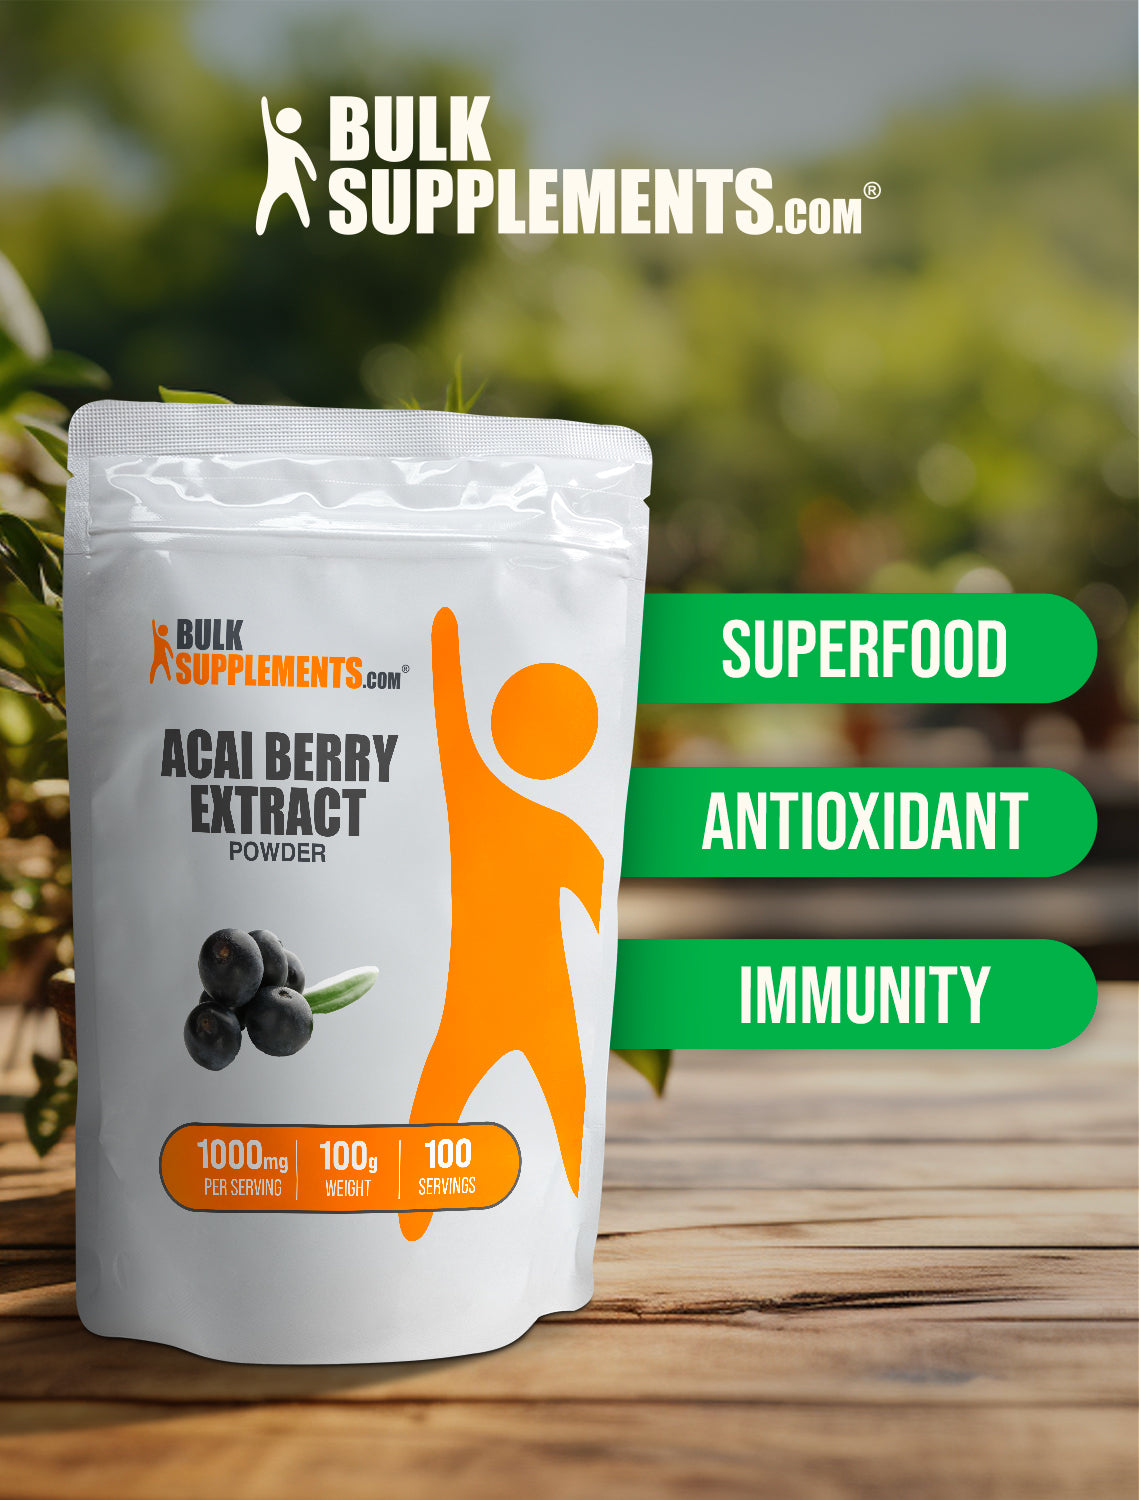 Acai Berry Extract powder keyword image 100g